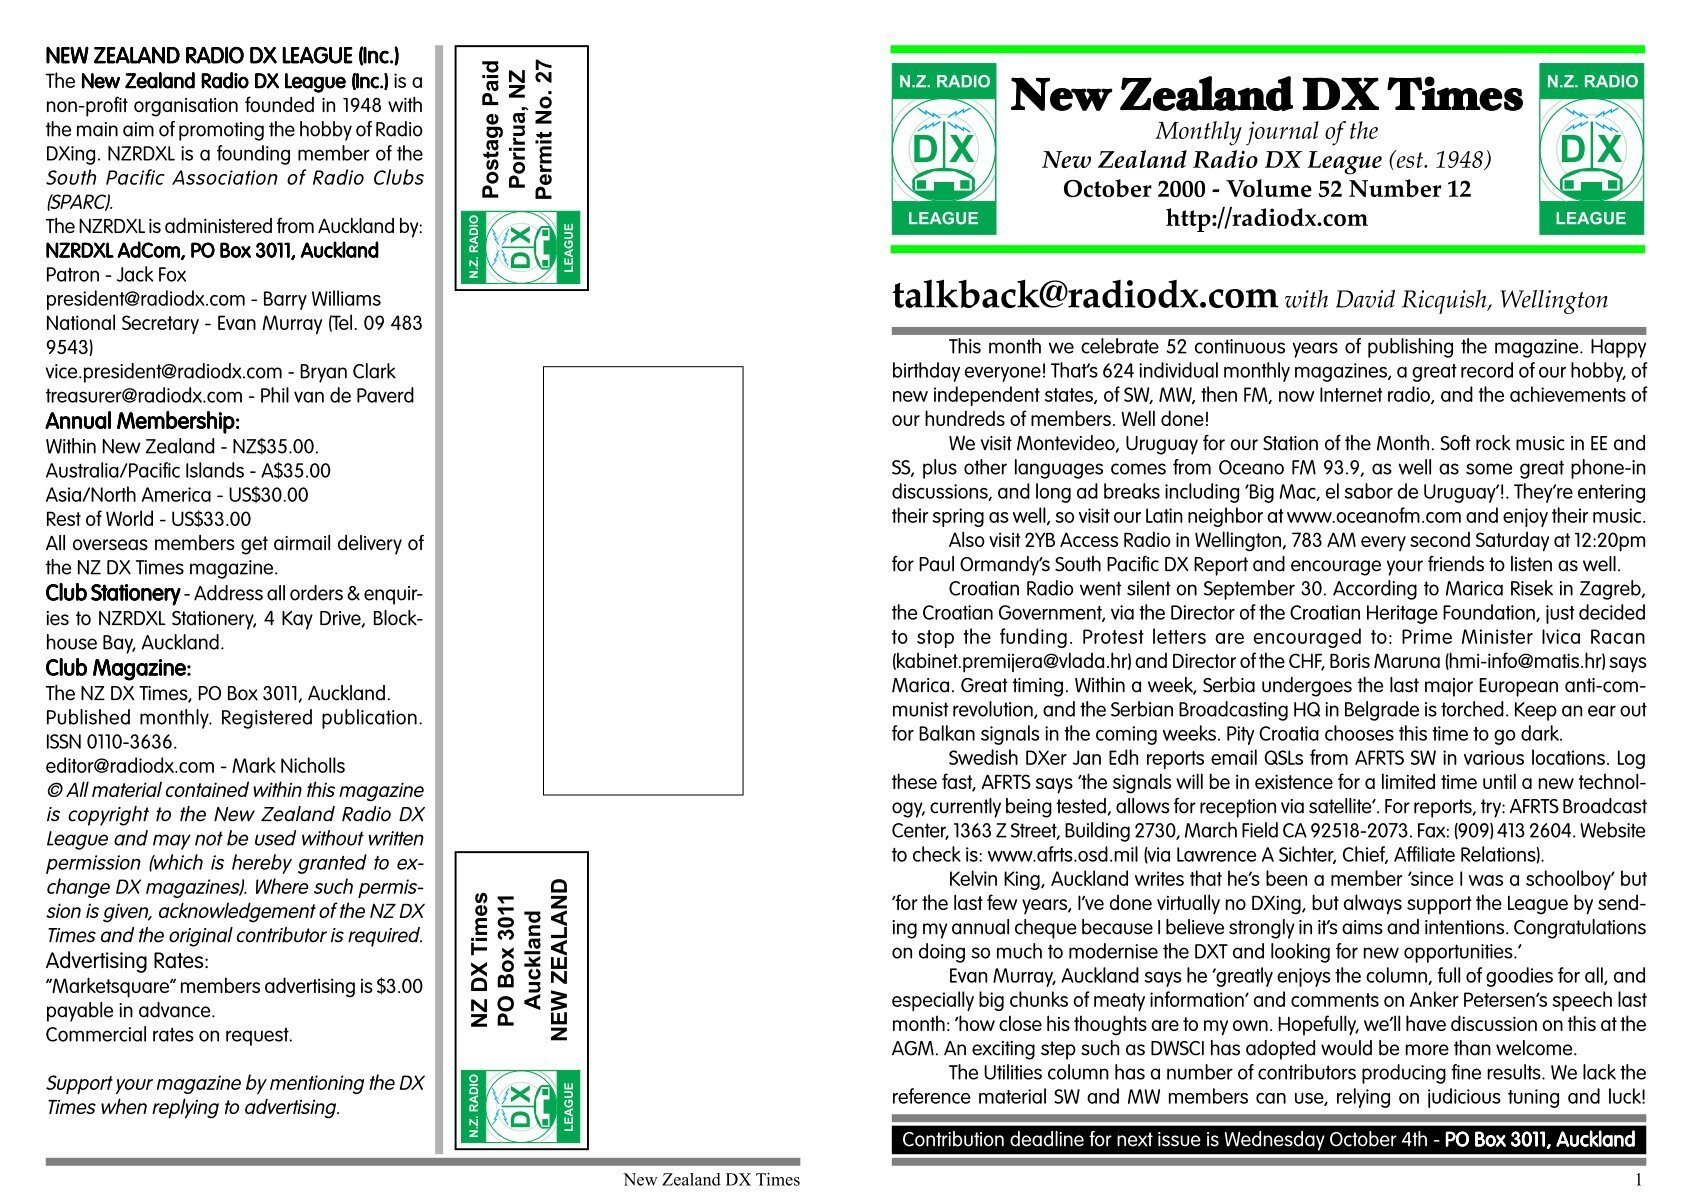 vejspærring bøf Næb New Zealand DX Times - World FM